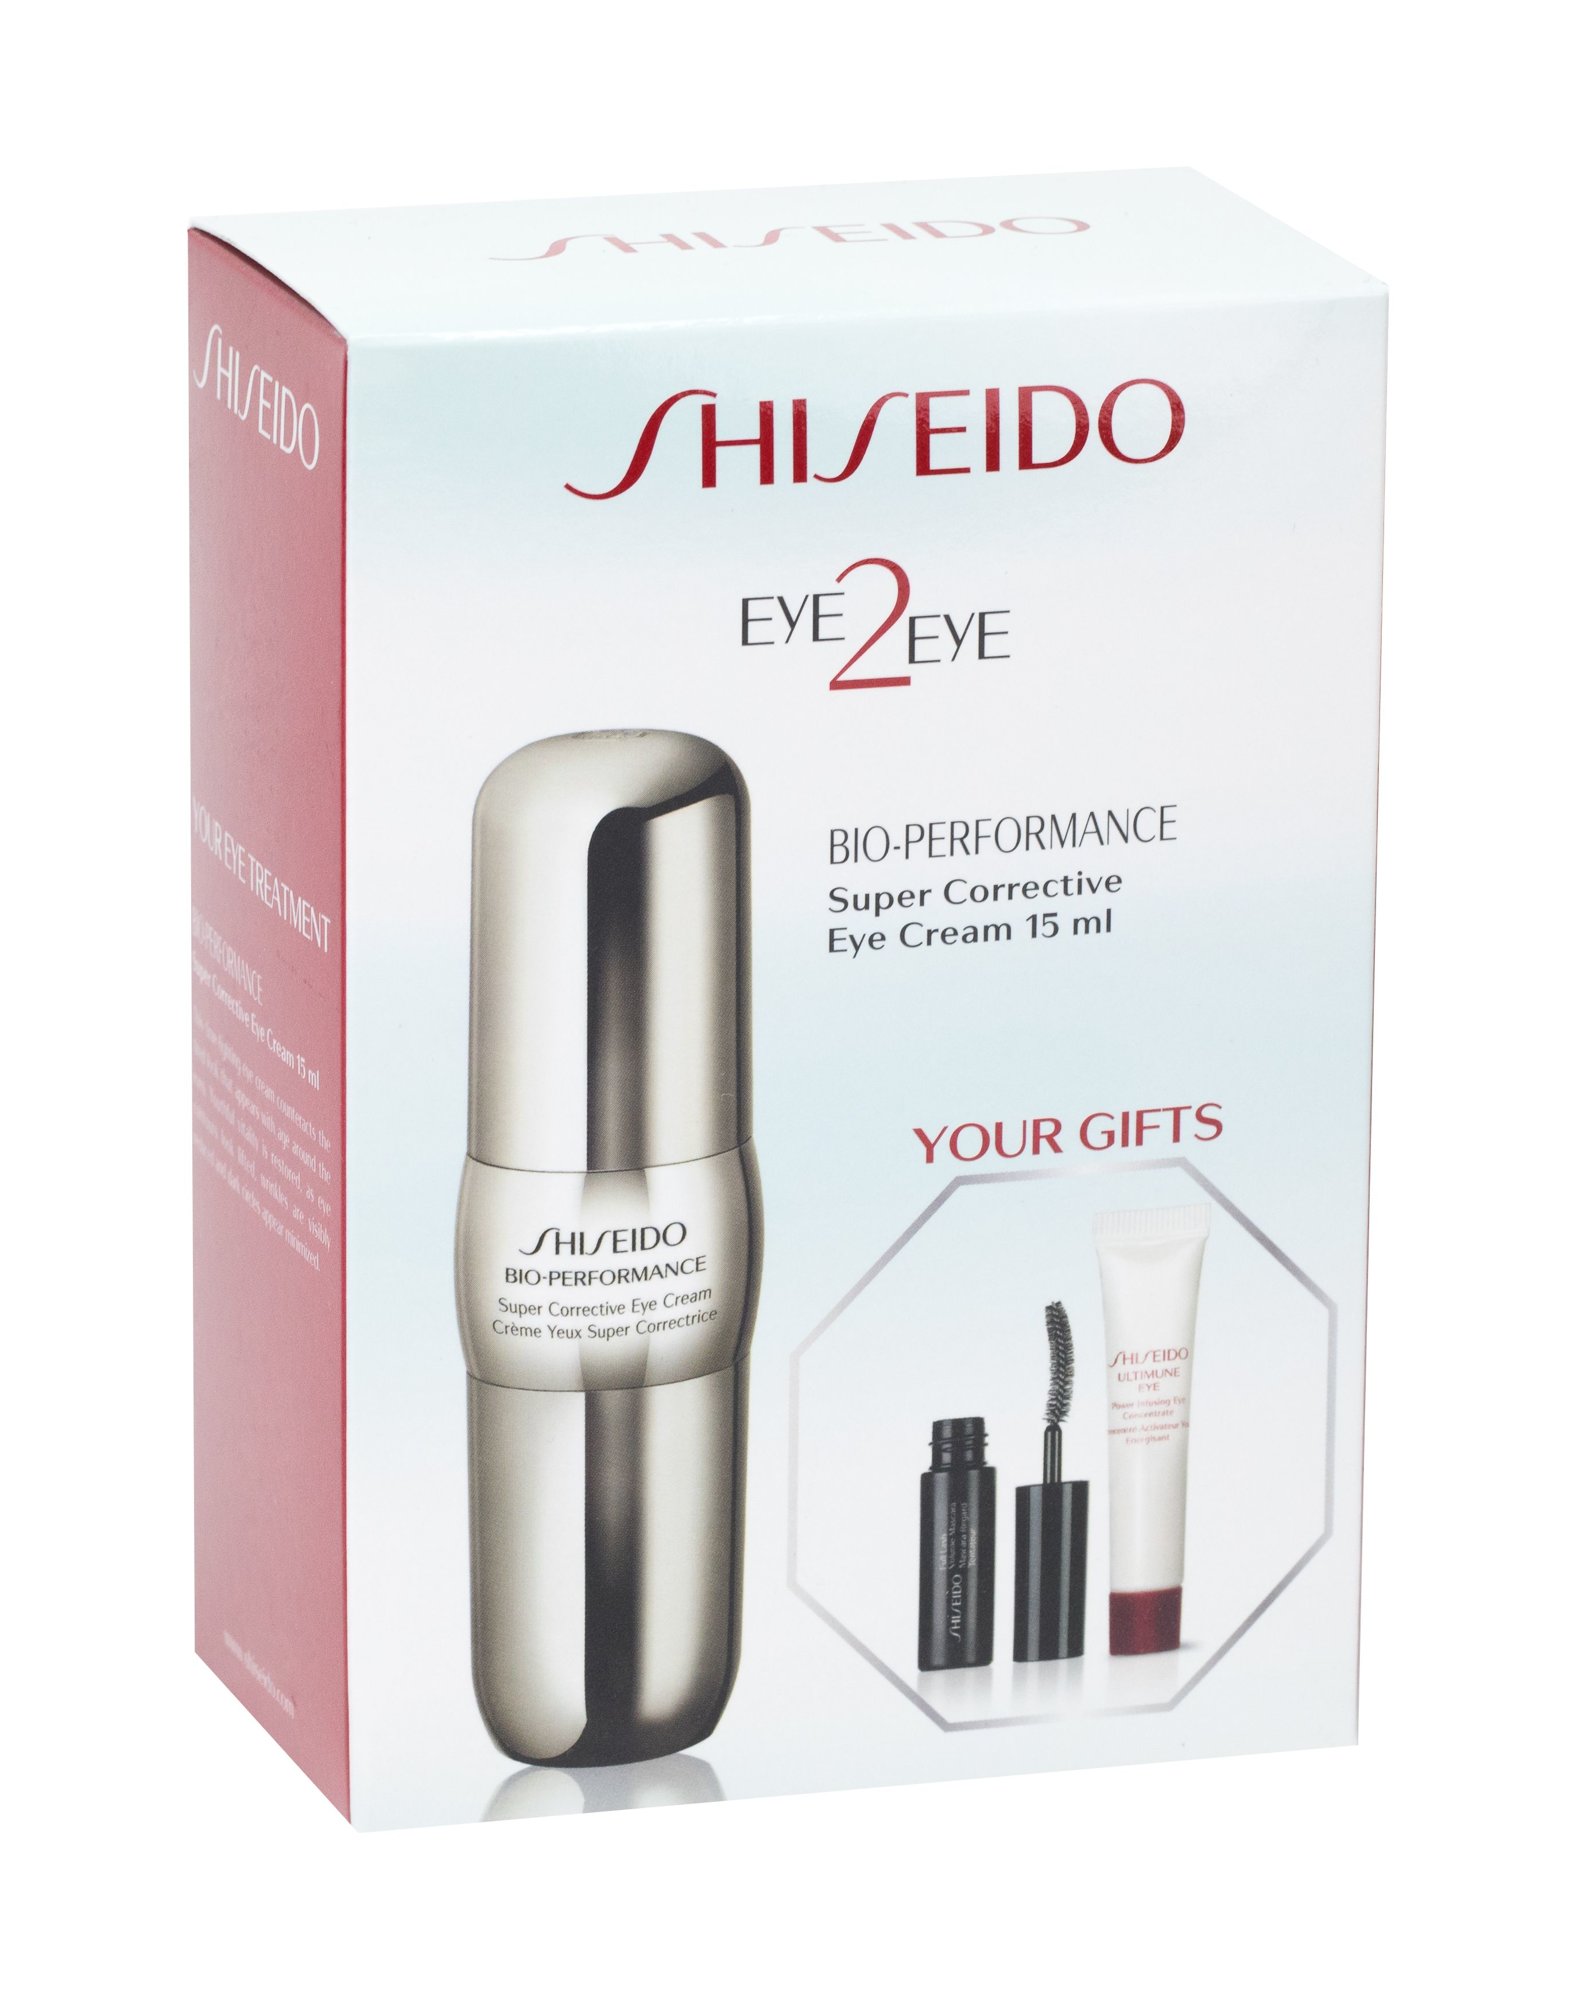 Shiseido Bio-Performance Eye2Eye 15ml 15ml BIO-PERFORMANCE Super Corrective Eye Cream + 2ml Full Lash Volume Mascara + 5ml Ultimune Power Infusing Eye Concentrate paakių kremas Rinkinys